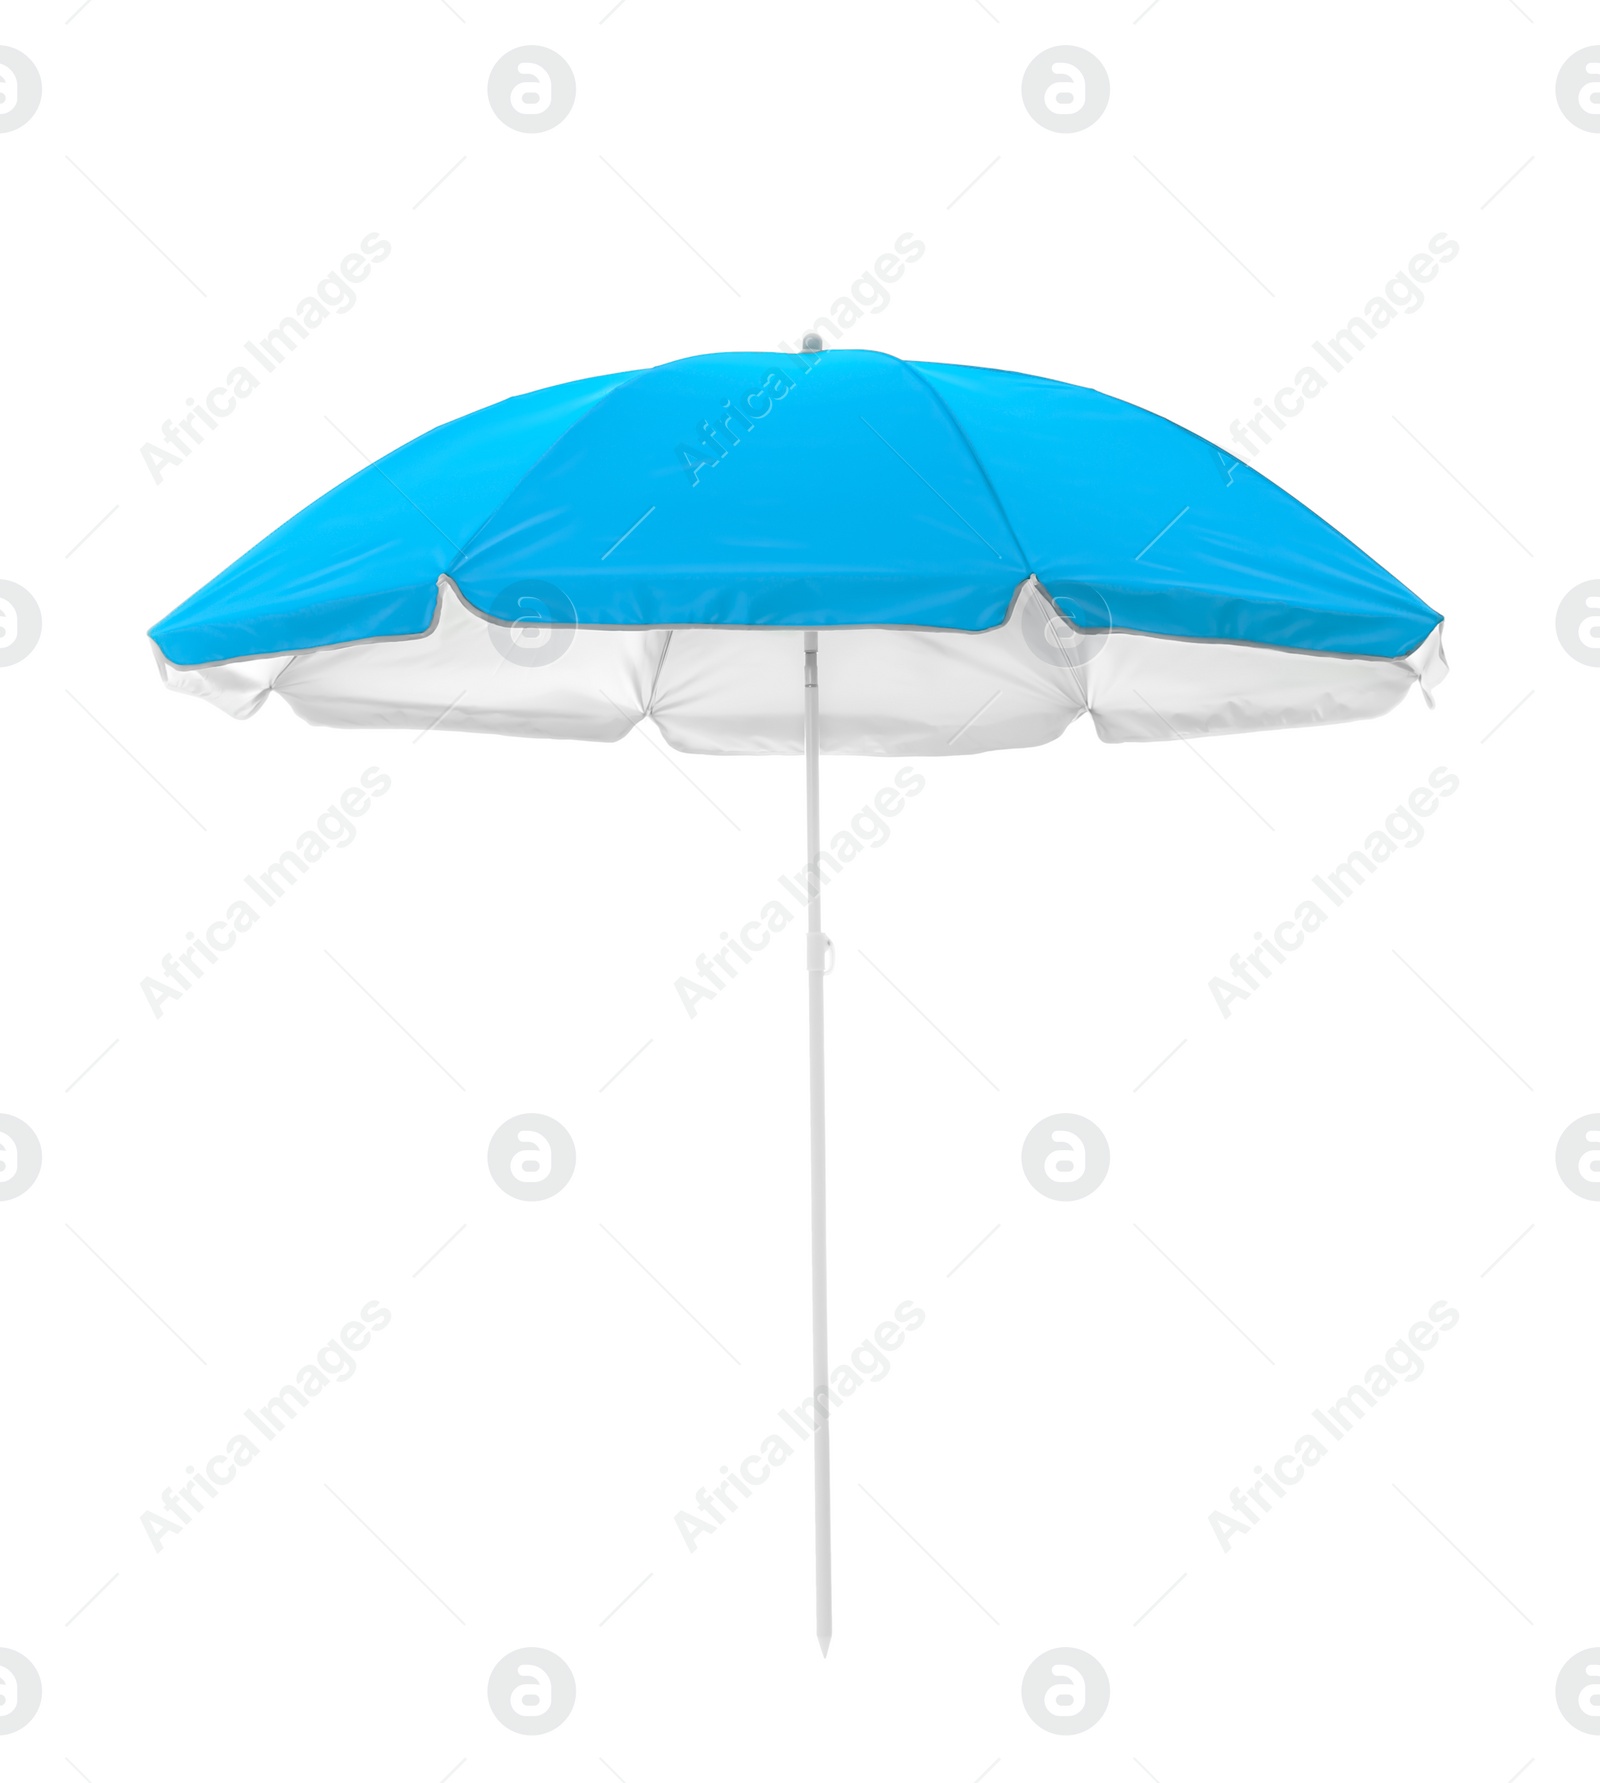 Image of Open light blue beach umbrella isolated on white